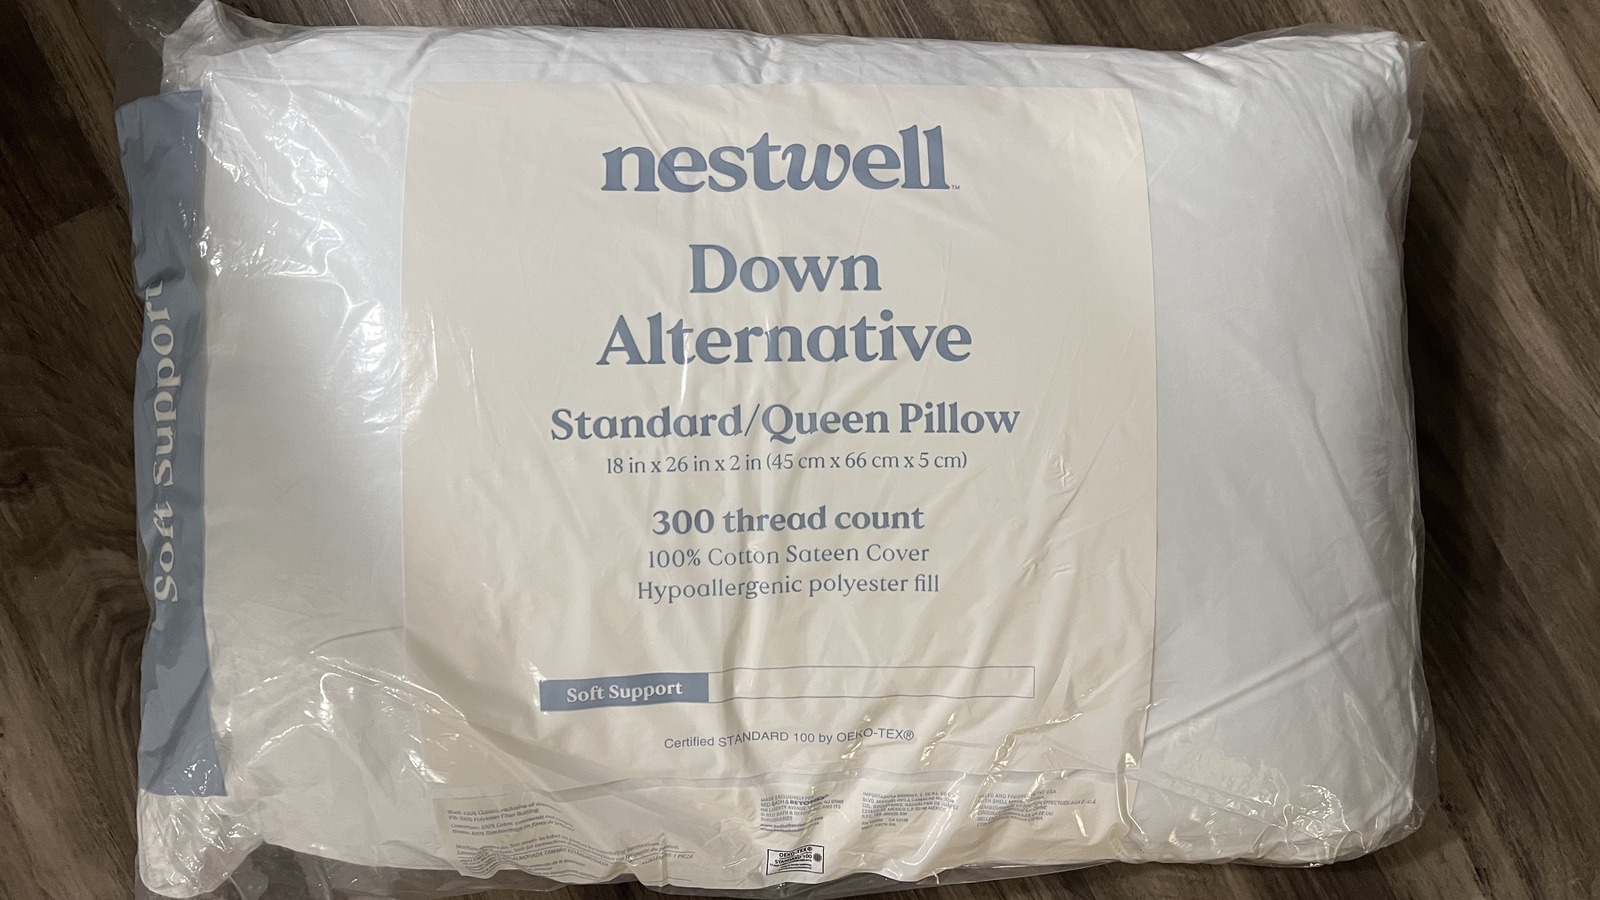 Extra Soft Cotton Damask Down Alternative Stomach Sleeper Pillow - On Sale  - Bed Bath & Beyond - 18058143